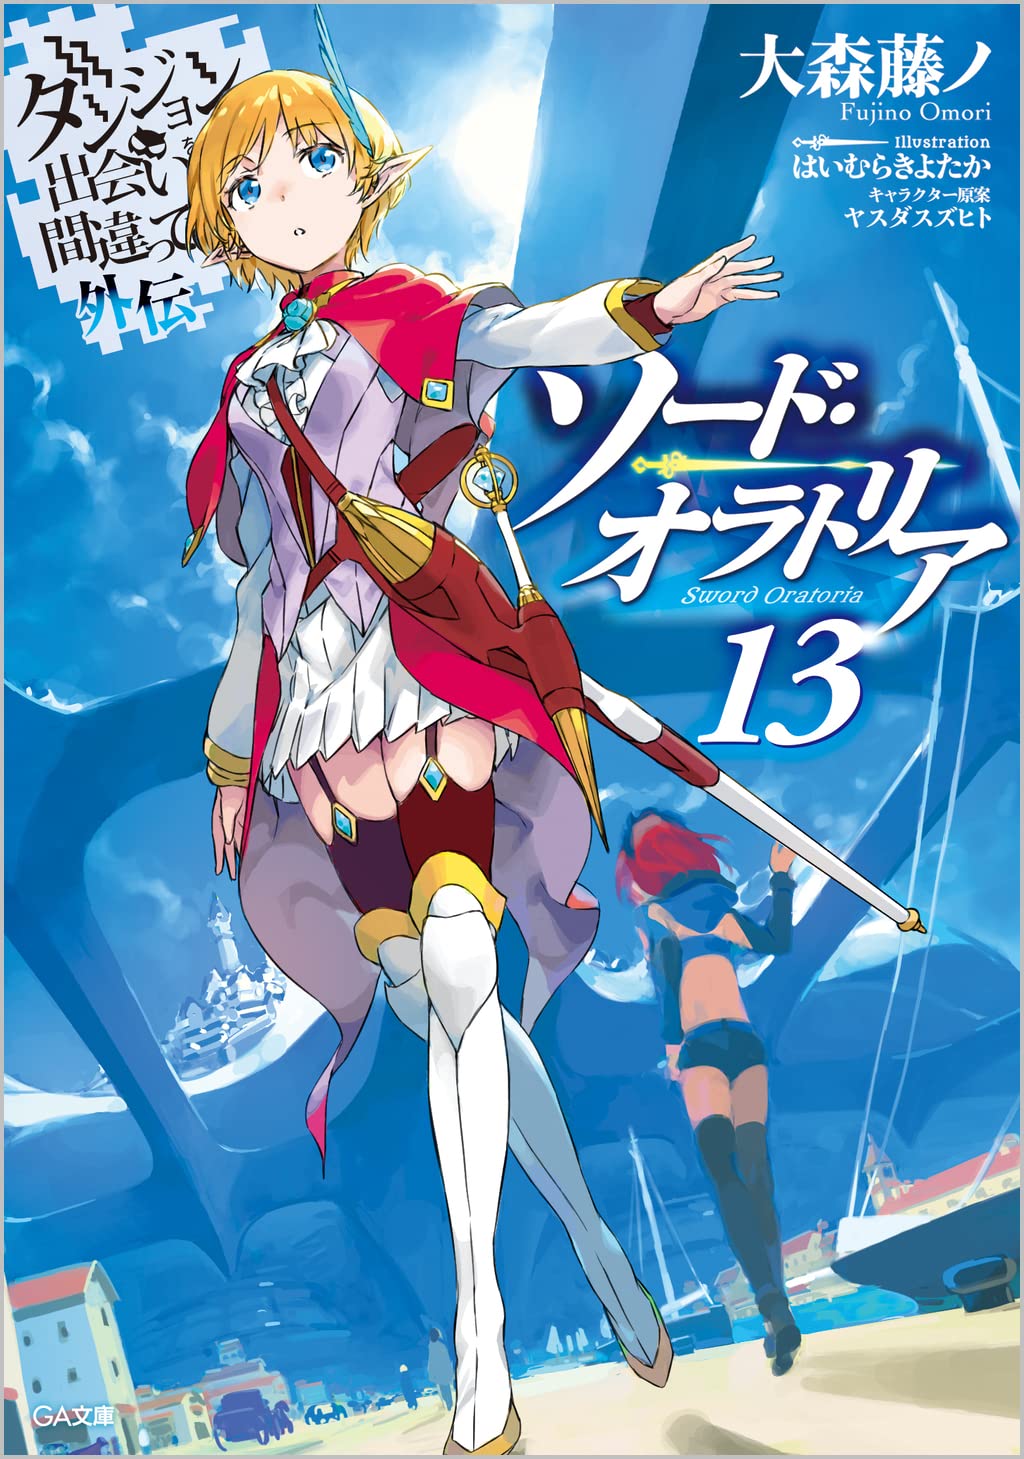 Dungeon ni Deai: Sword Oratoria tem numero de episódios revelado - Anime  United